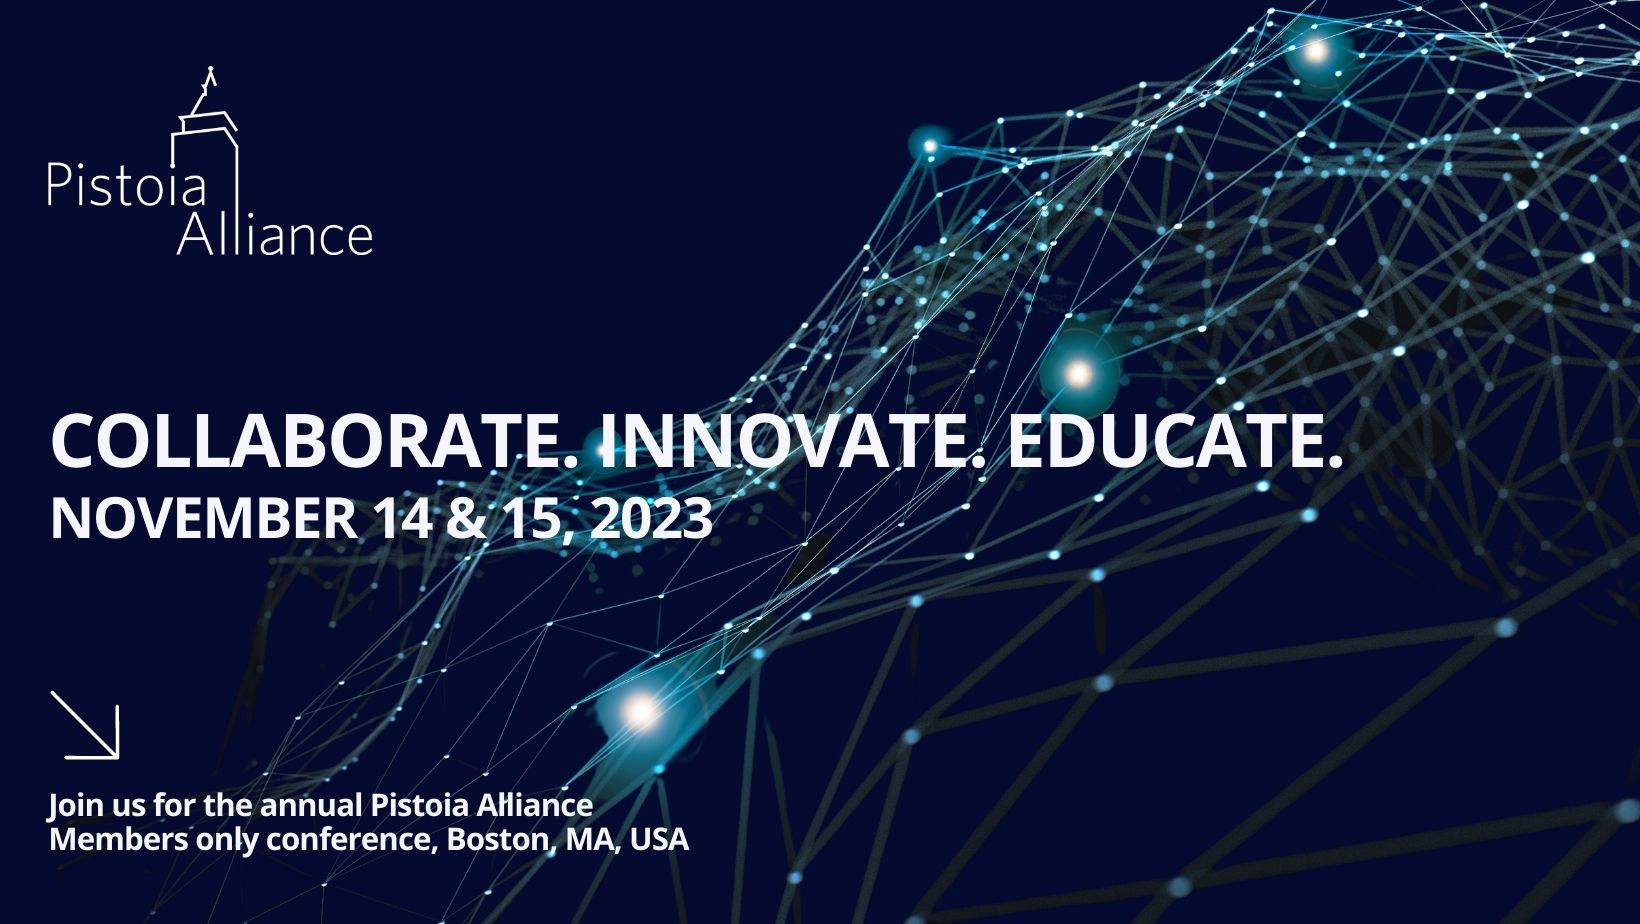 Pistoia Alliance's 2023 Collaborate. Innovate. Educate Conference USA